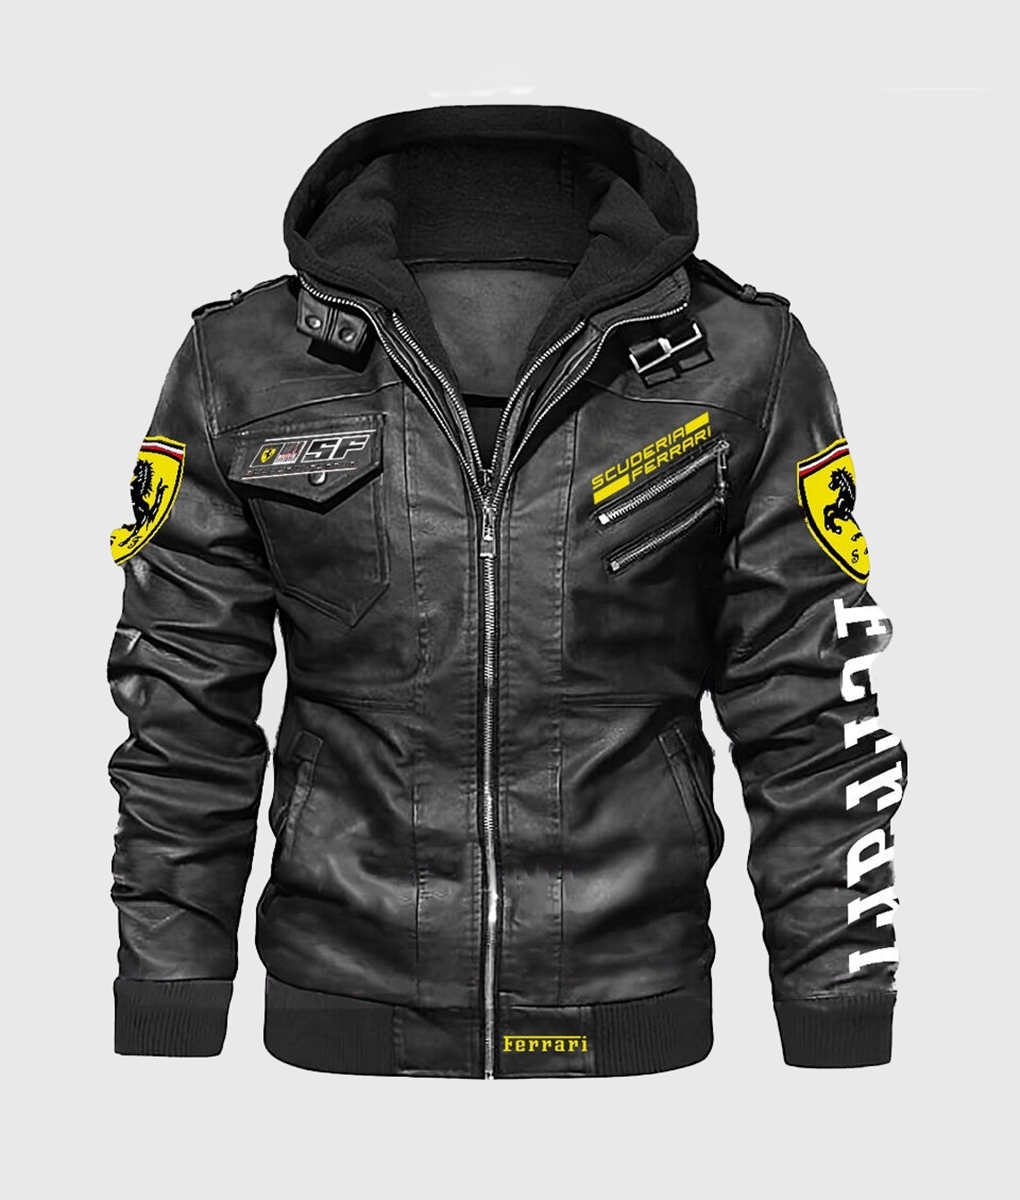 Ferrari F1 Black Leather Jacket (1)